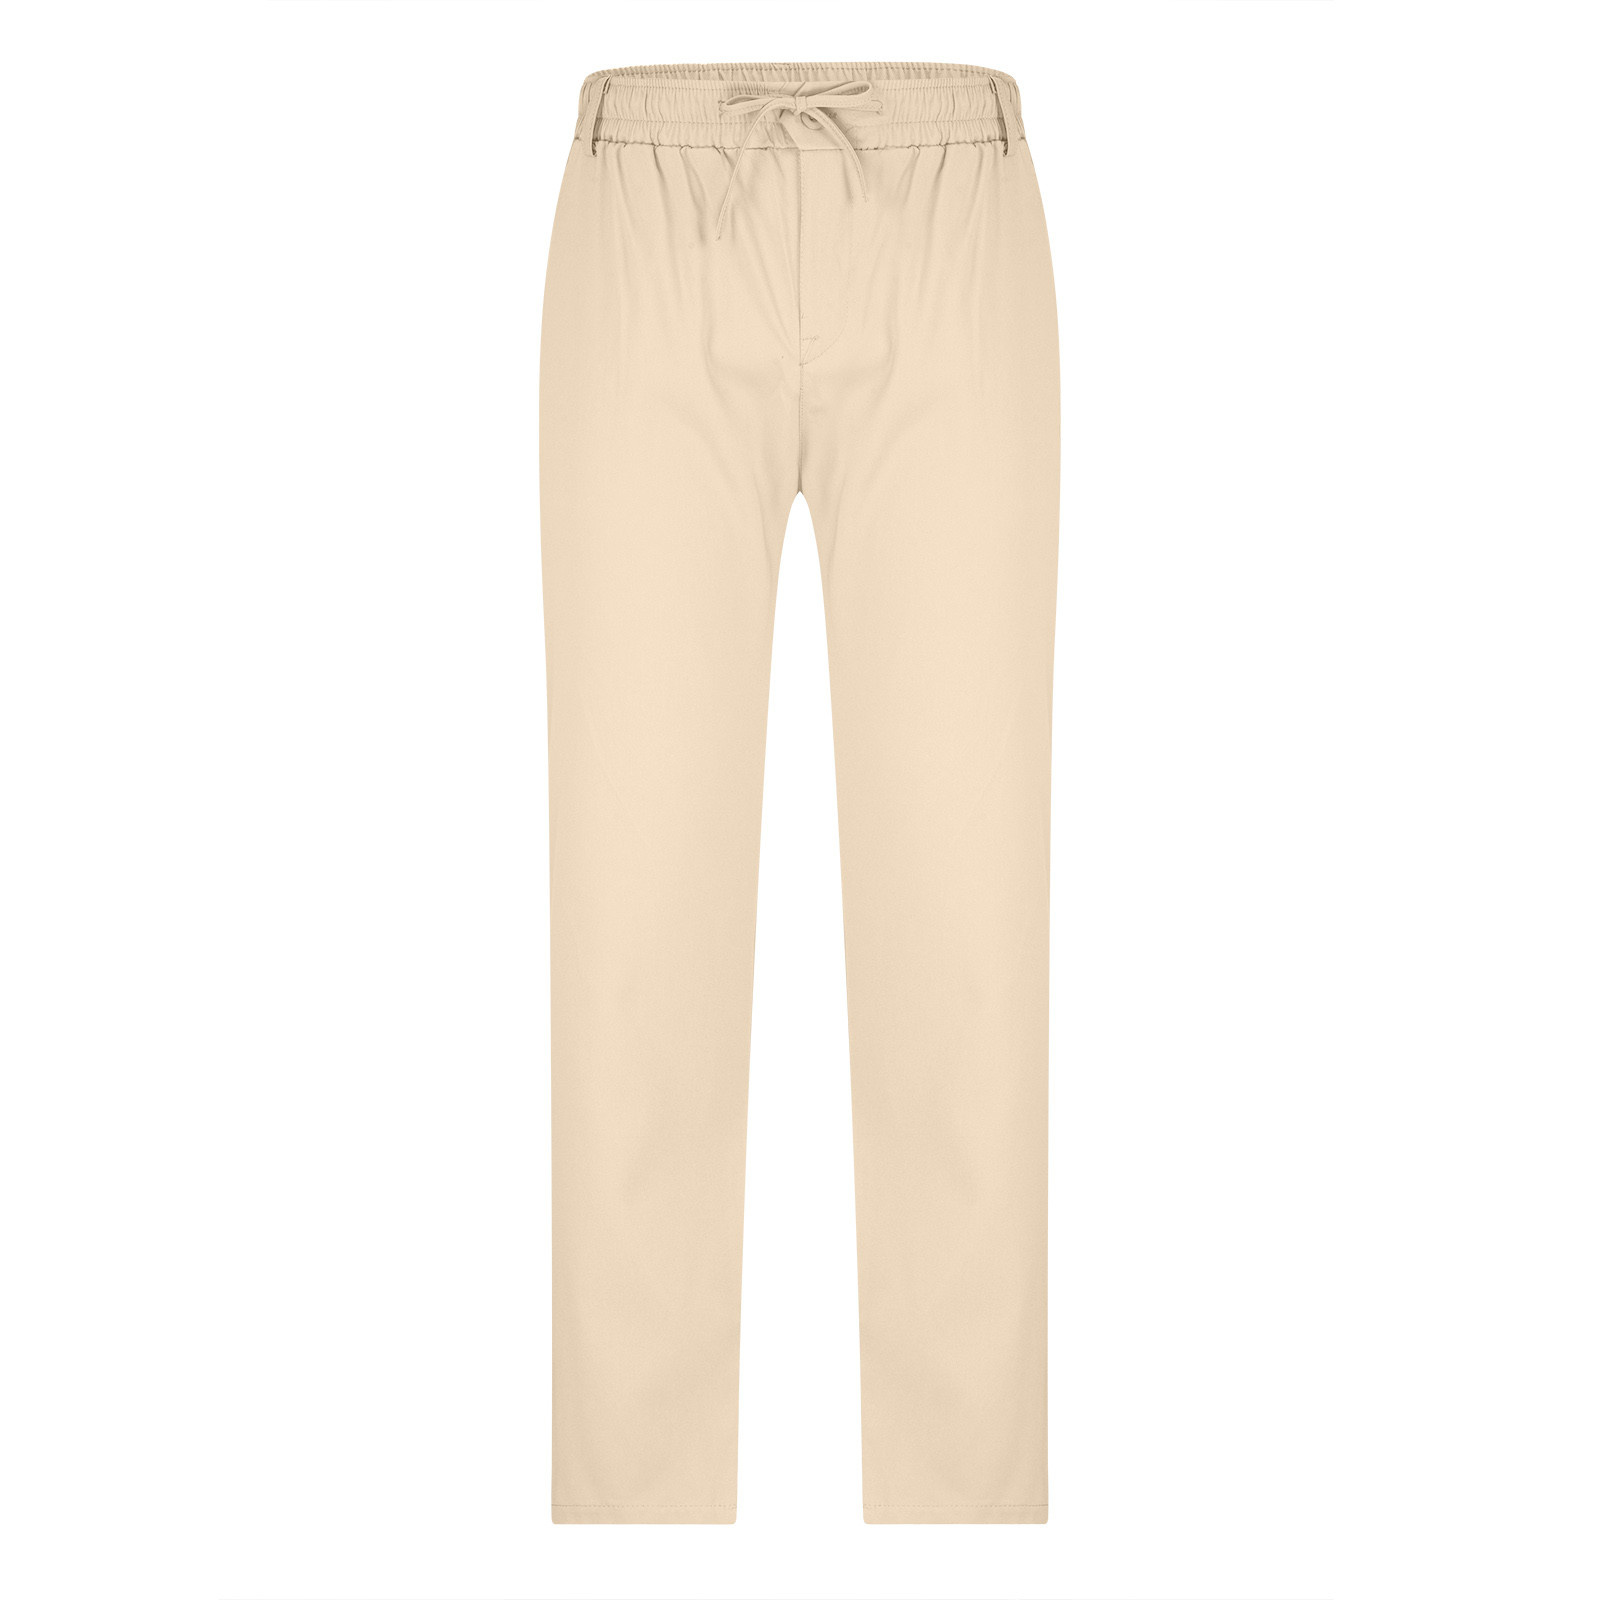 Tdoqot Chinos Pants Men- Cotton Drawstring Comftable Elastic Waist Slim Casual Mens Pants Beige - image 5 of 6